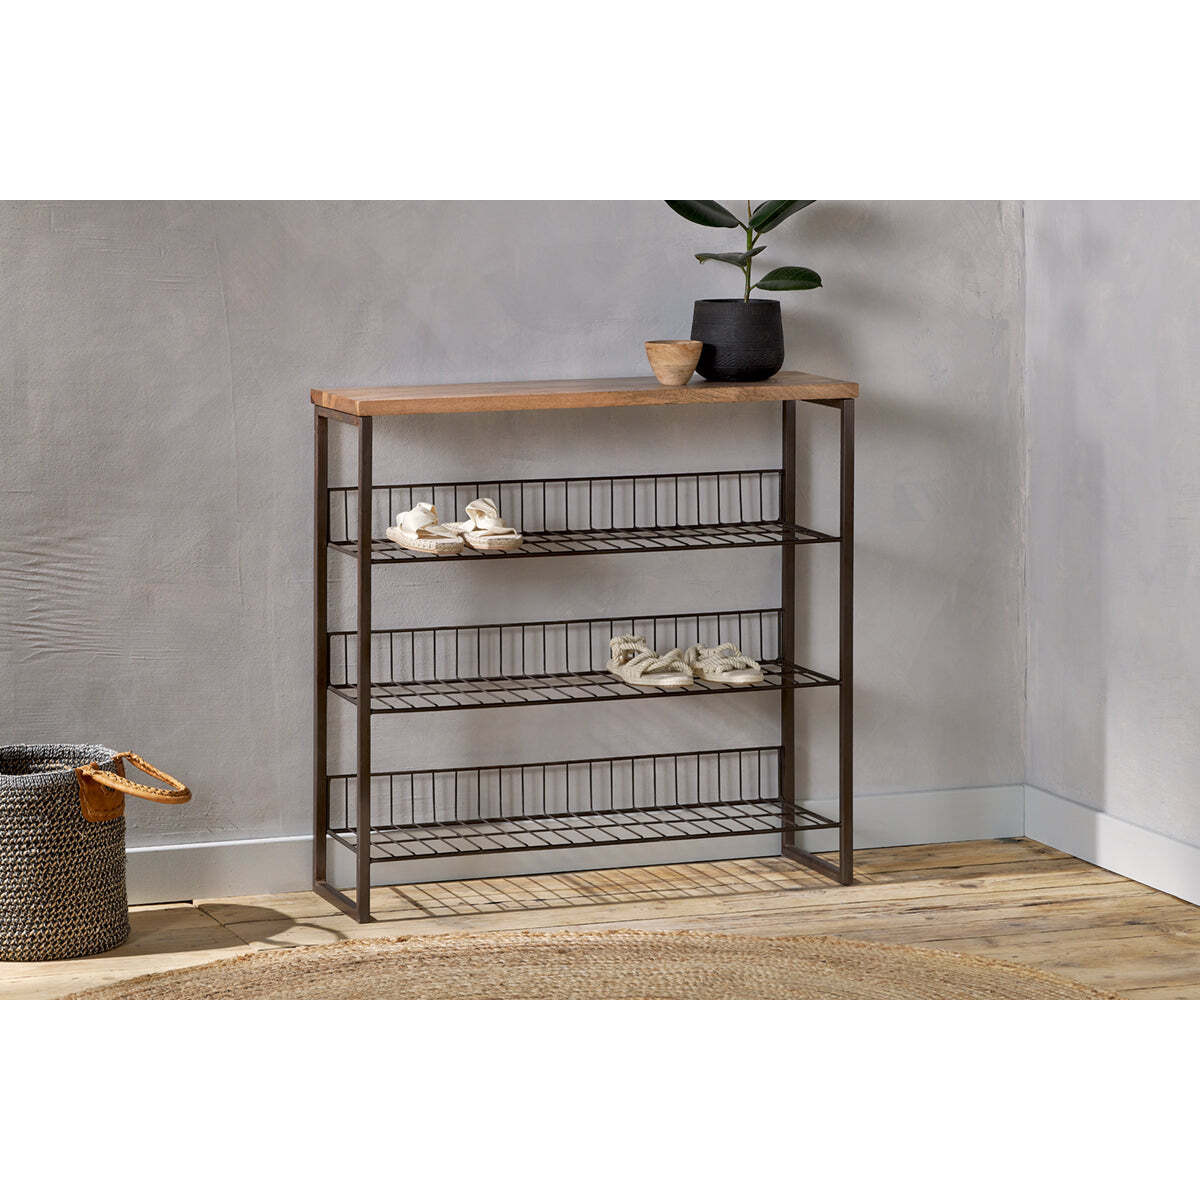 Nkuku Kiyoma Iron & Wood Tall Standing Shelves - Storage Furniture - Natural